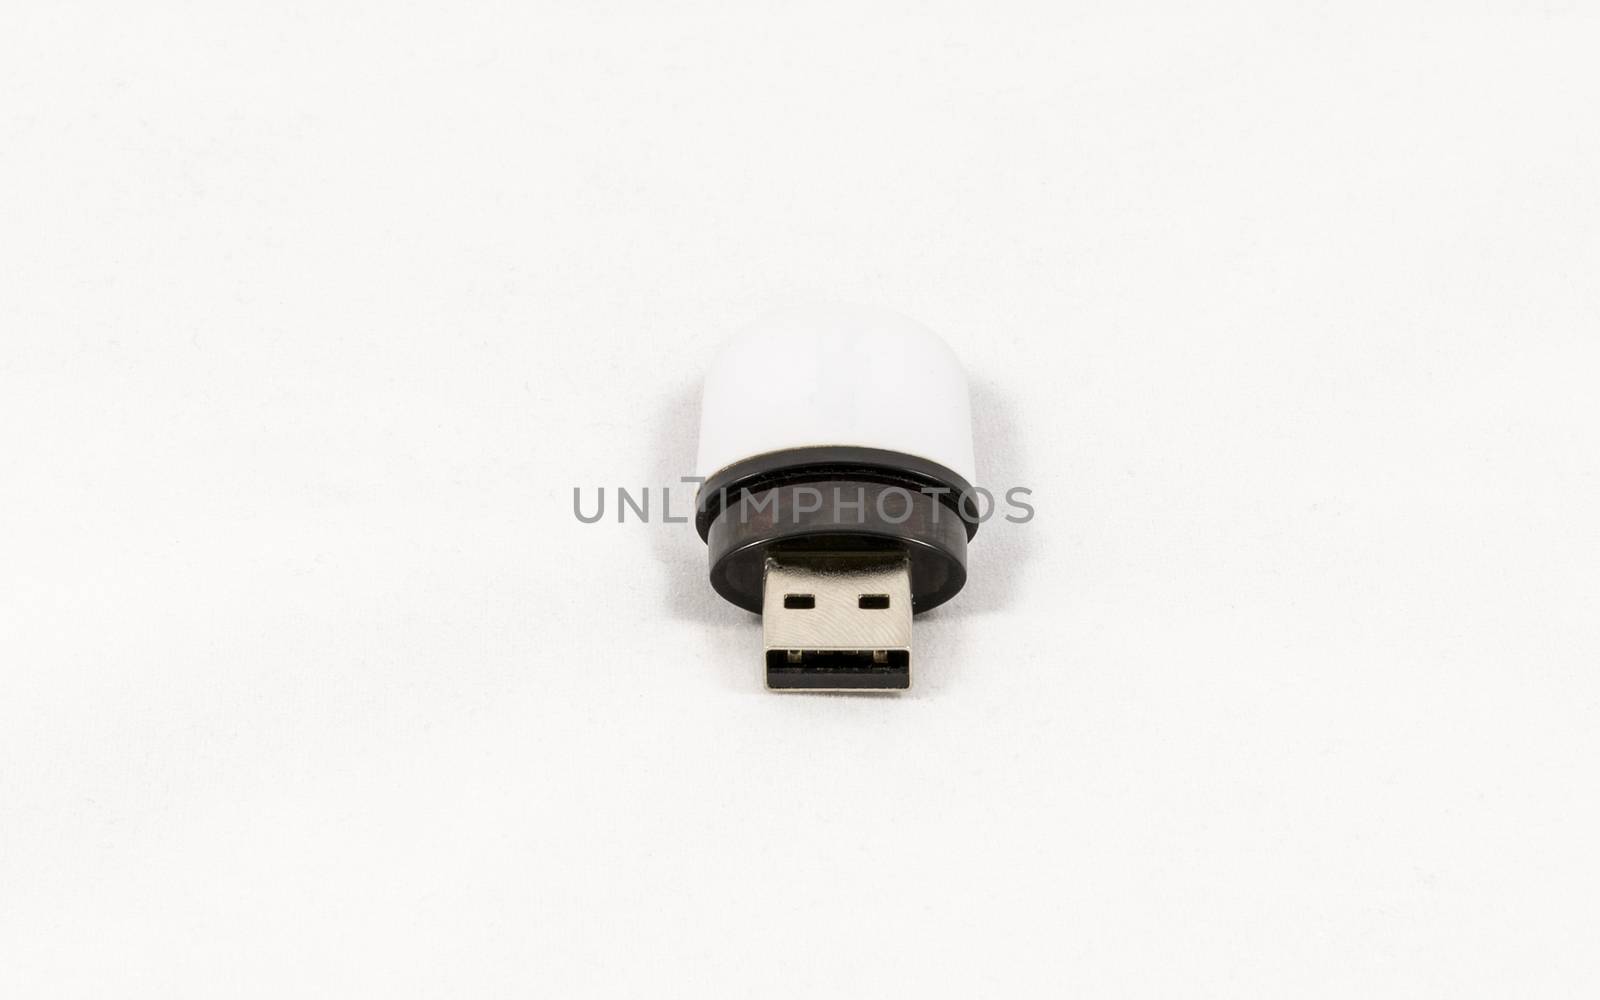 USB flash drive by marcorubino